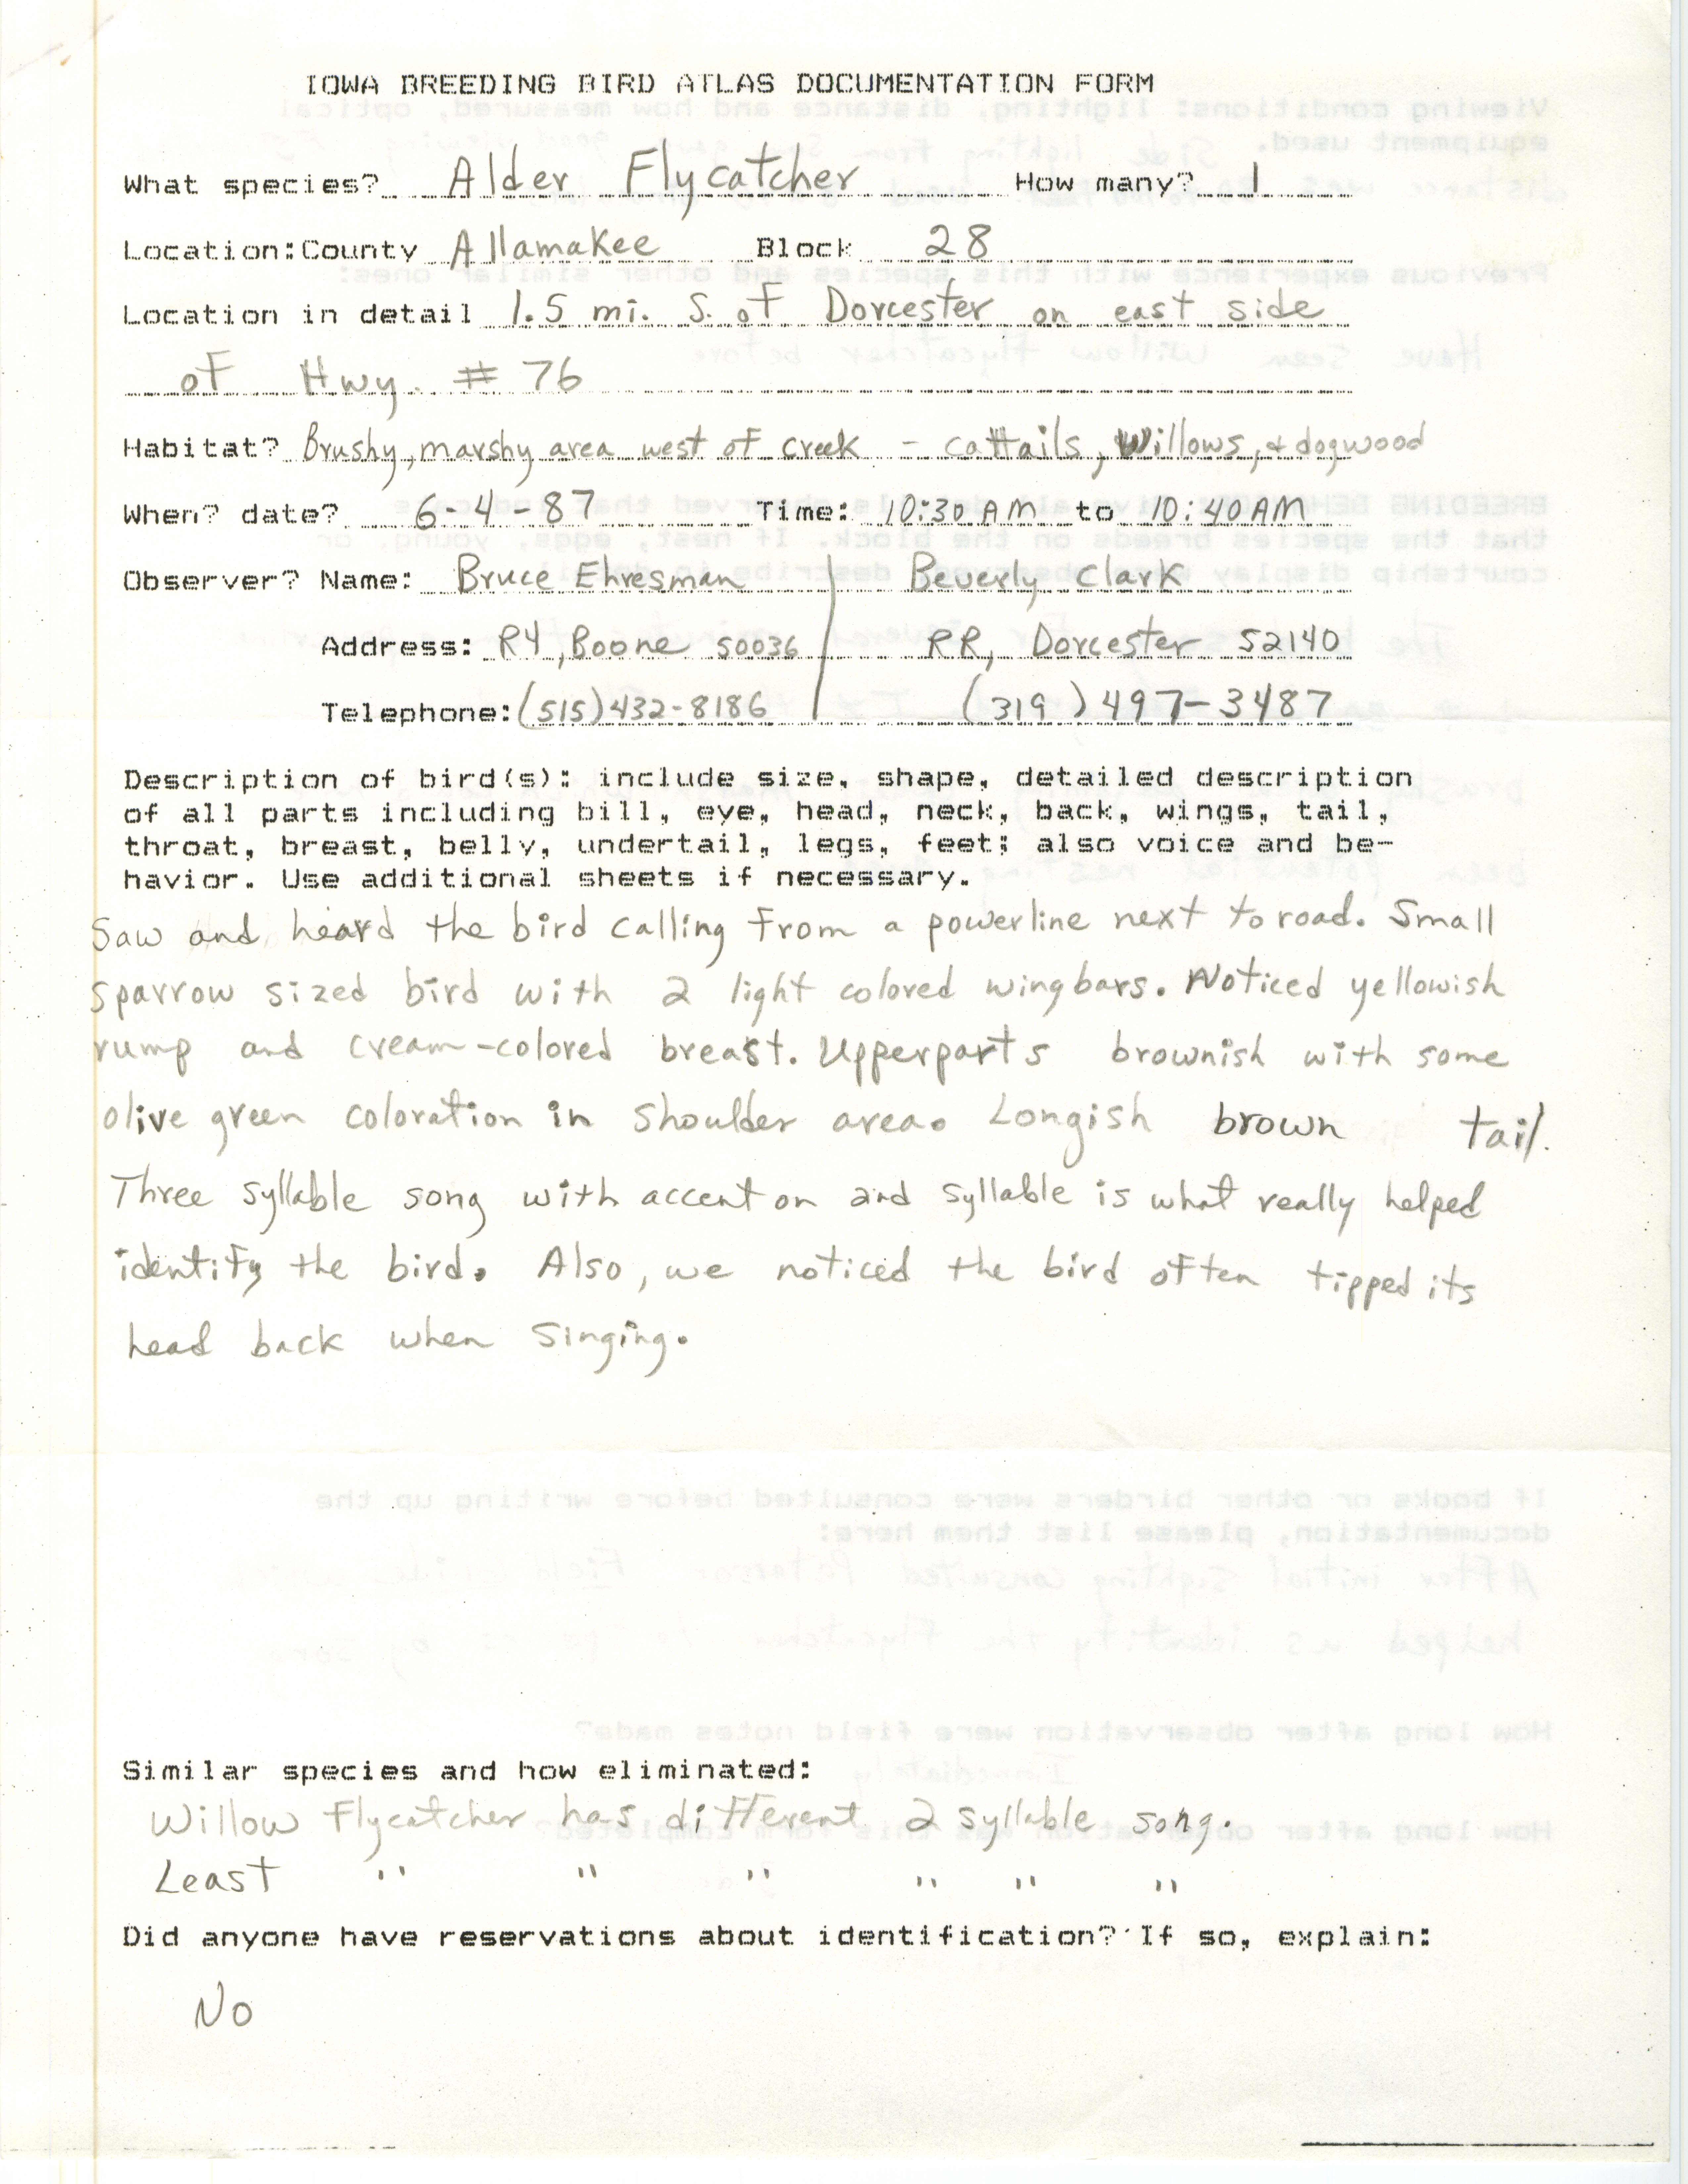 Iowa Breeding Bird Atlas documentation form, Bruce Ehresman and Beverly Clark, June 4, 1987